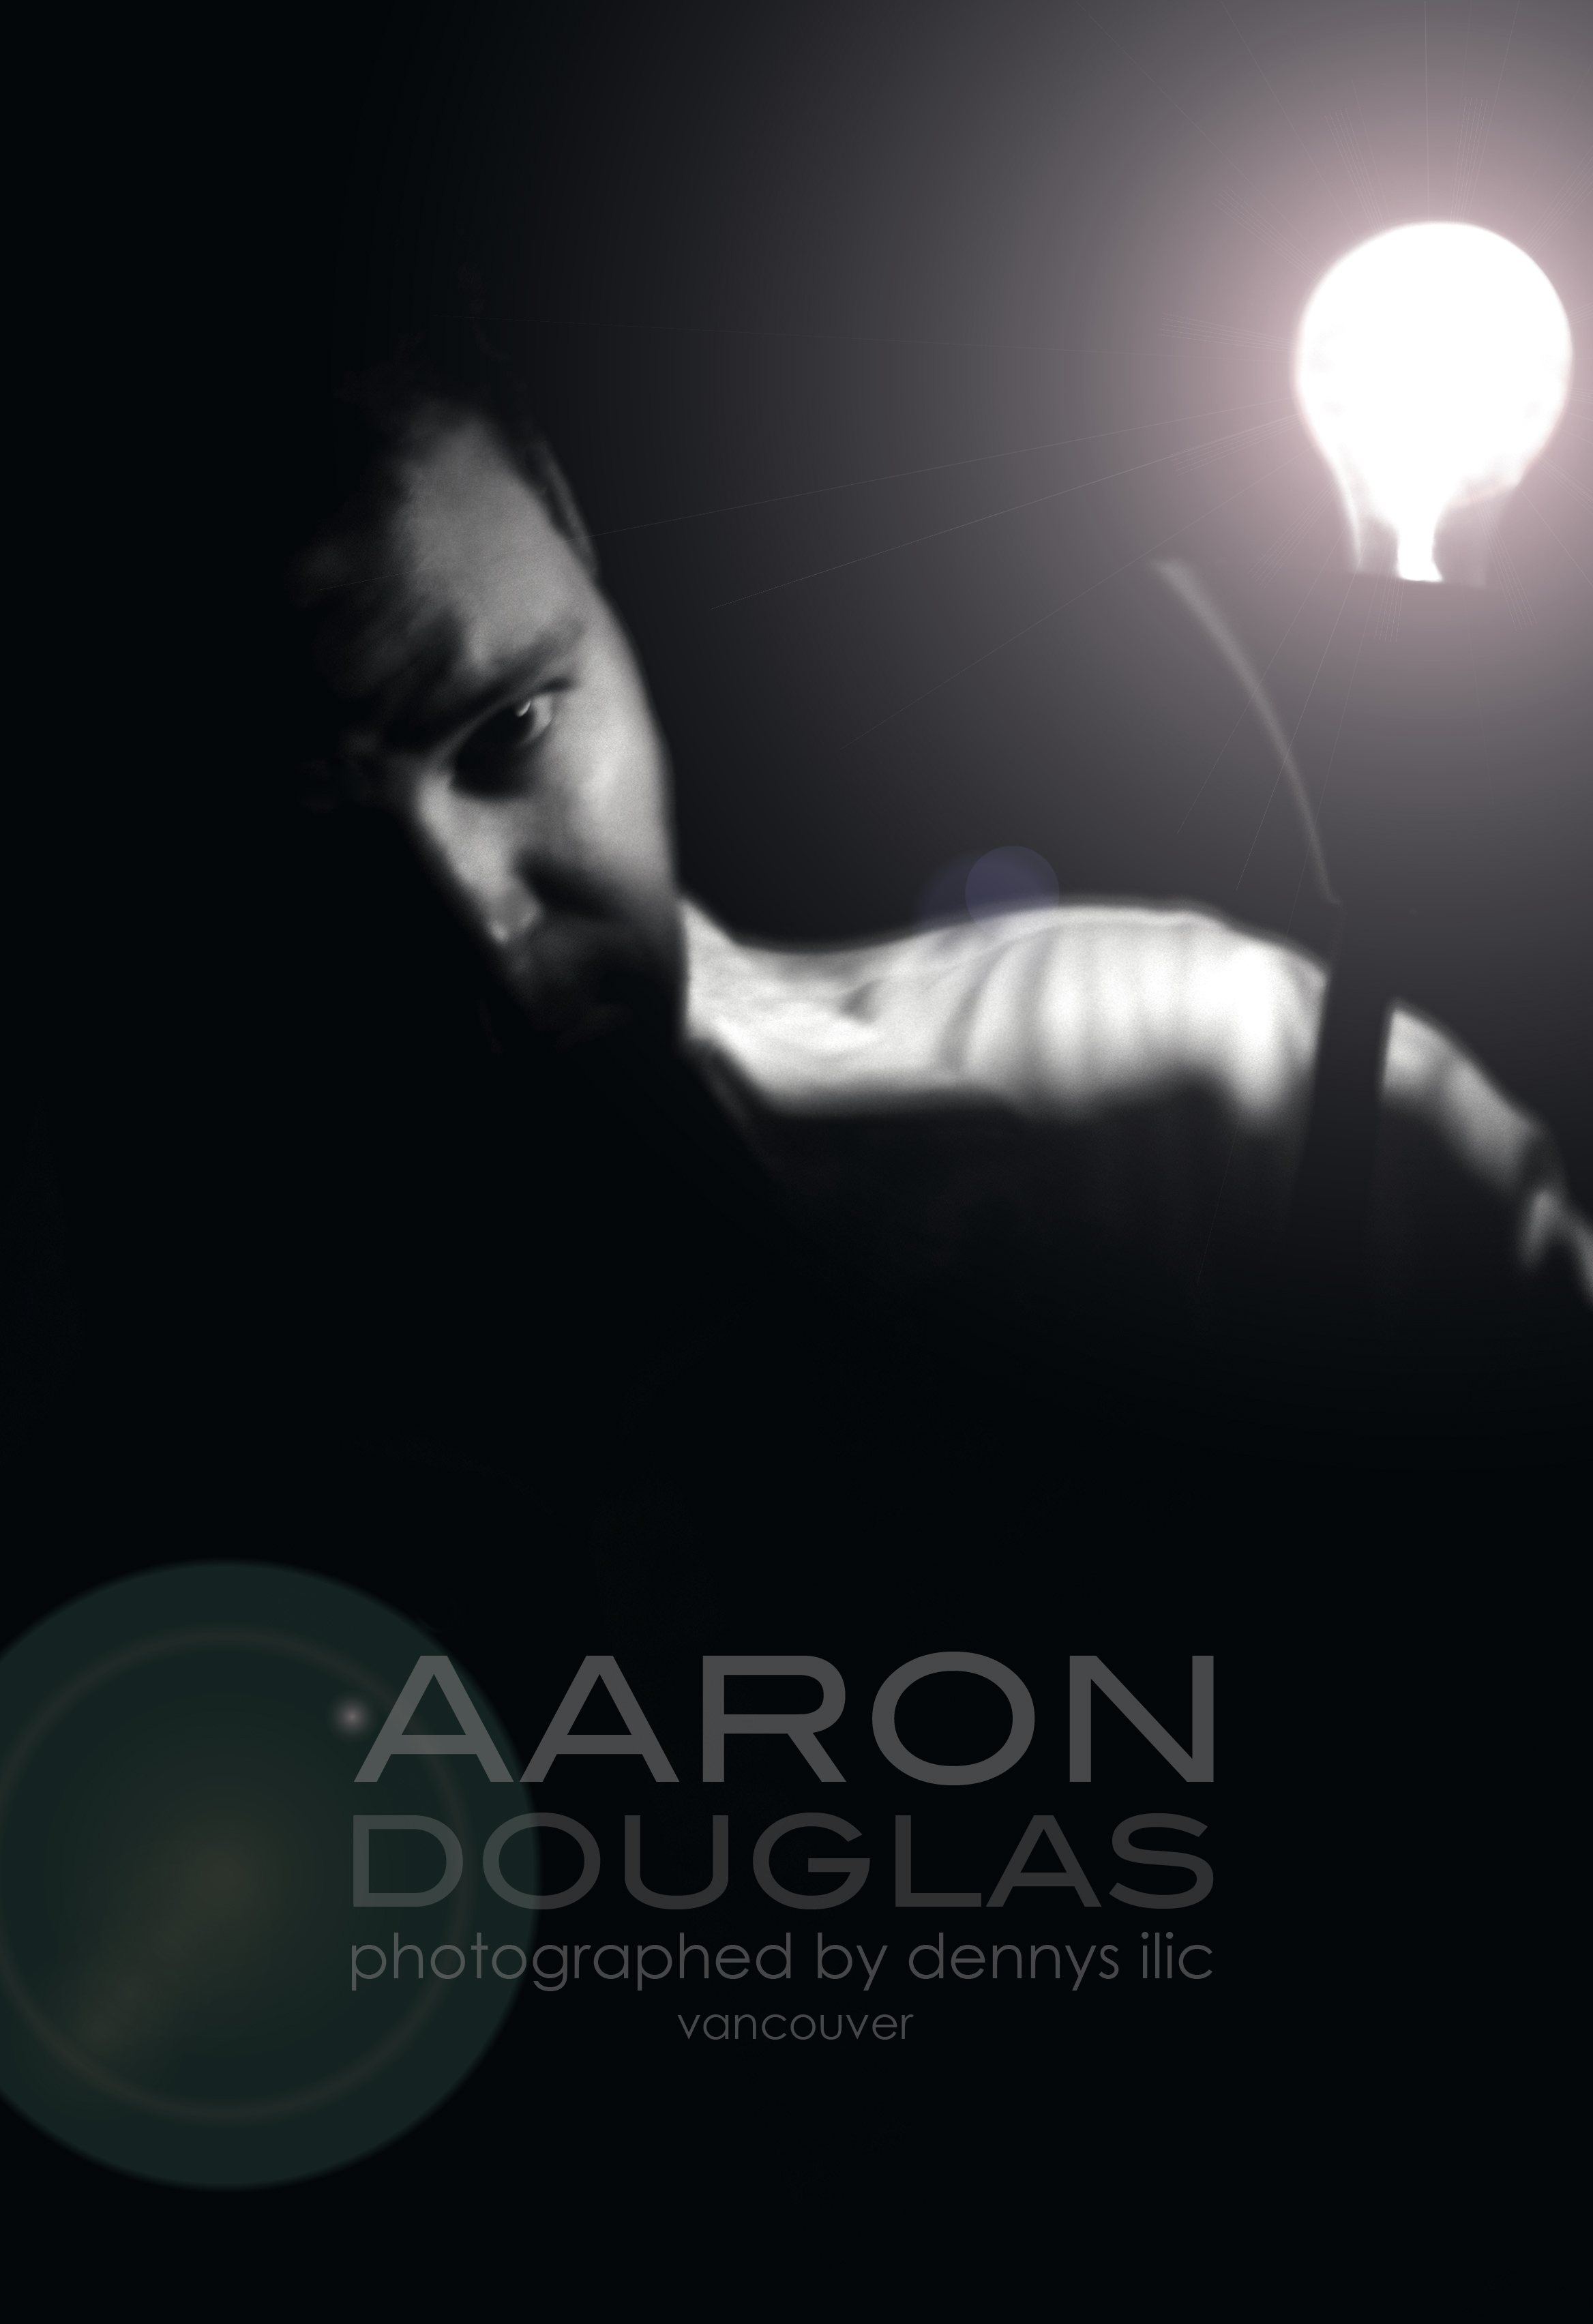 Actor Aaron Douglas photographed by Dennys Ilic